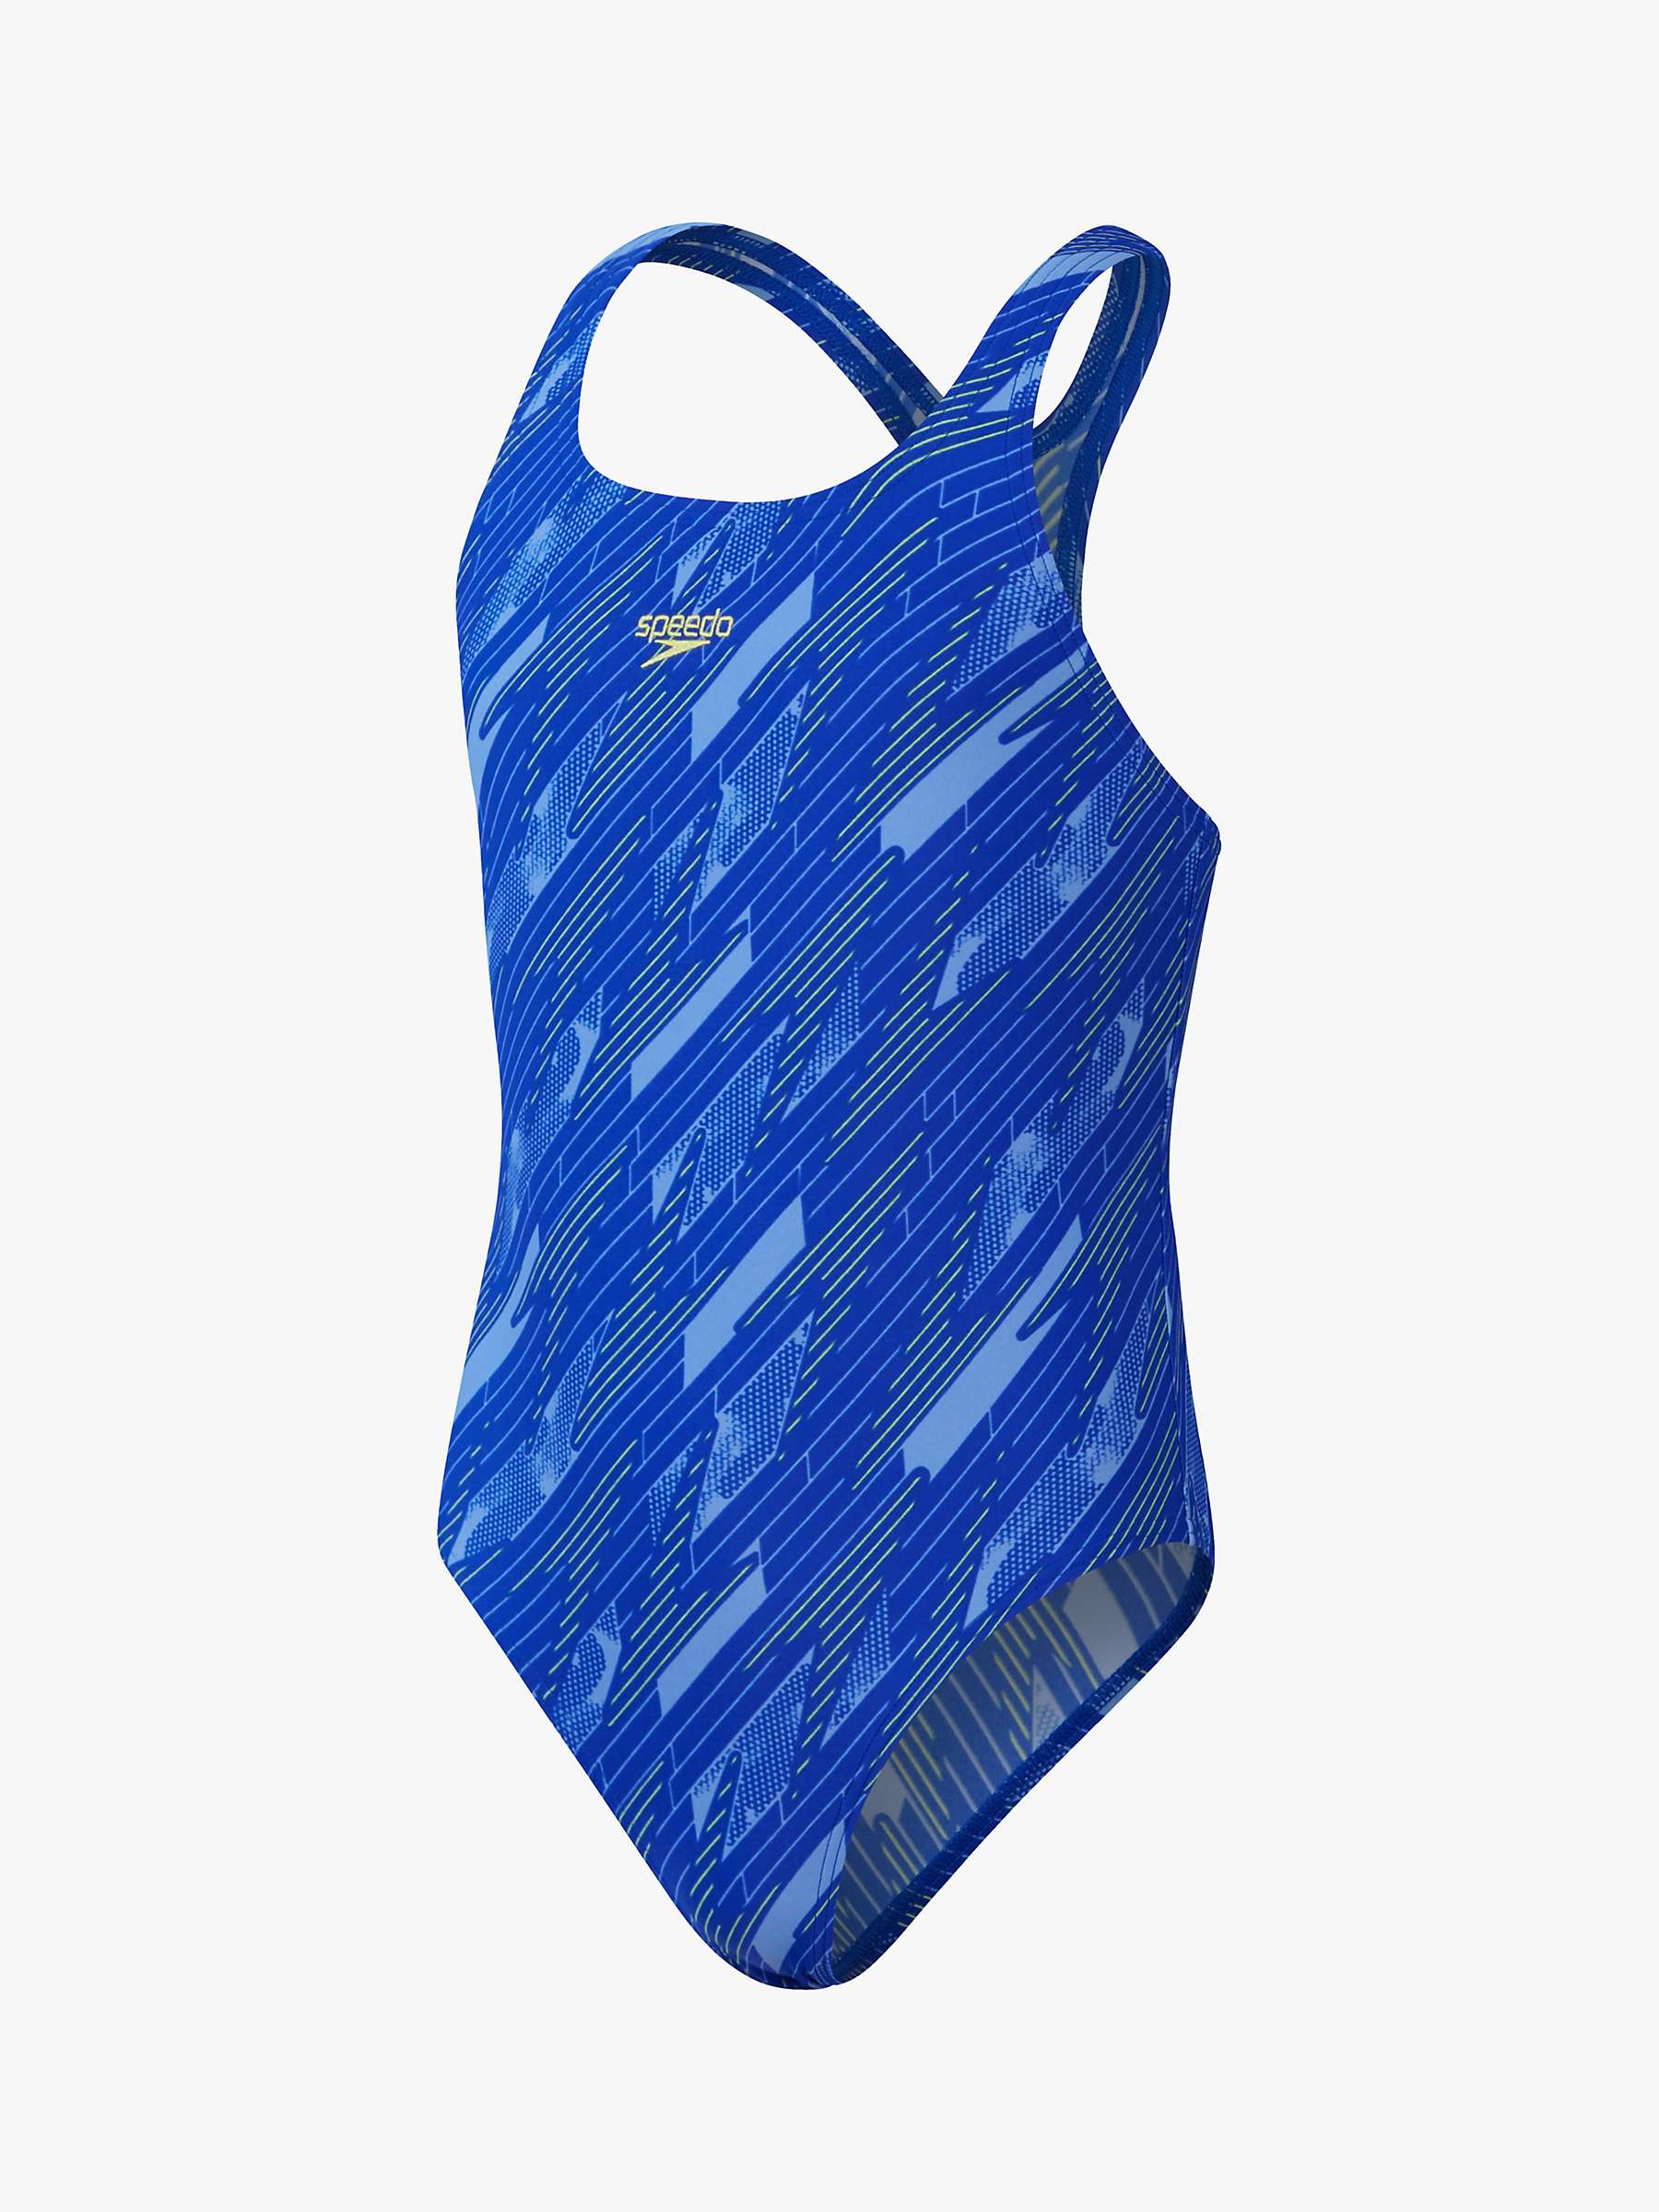 Buy Speedo Kids' Hyperboom Graphic Medalist Swimsuit, Blue/Multi Online at johnlewis.com